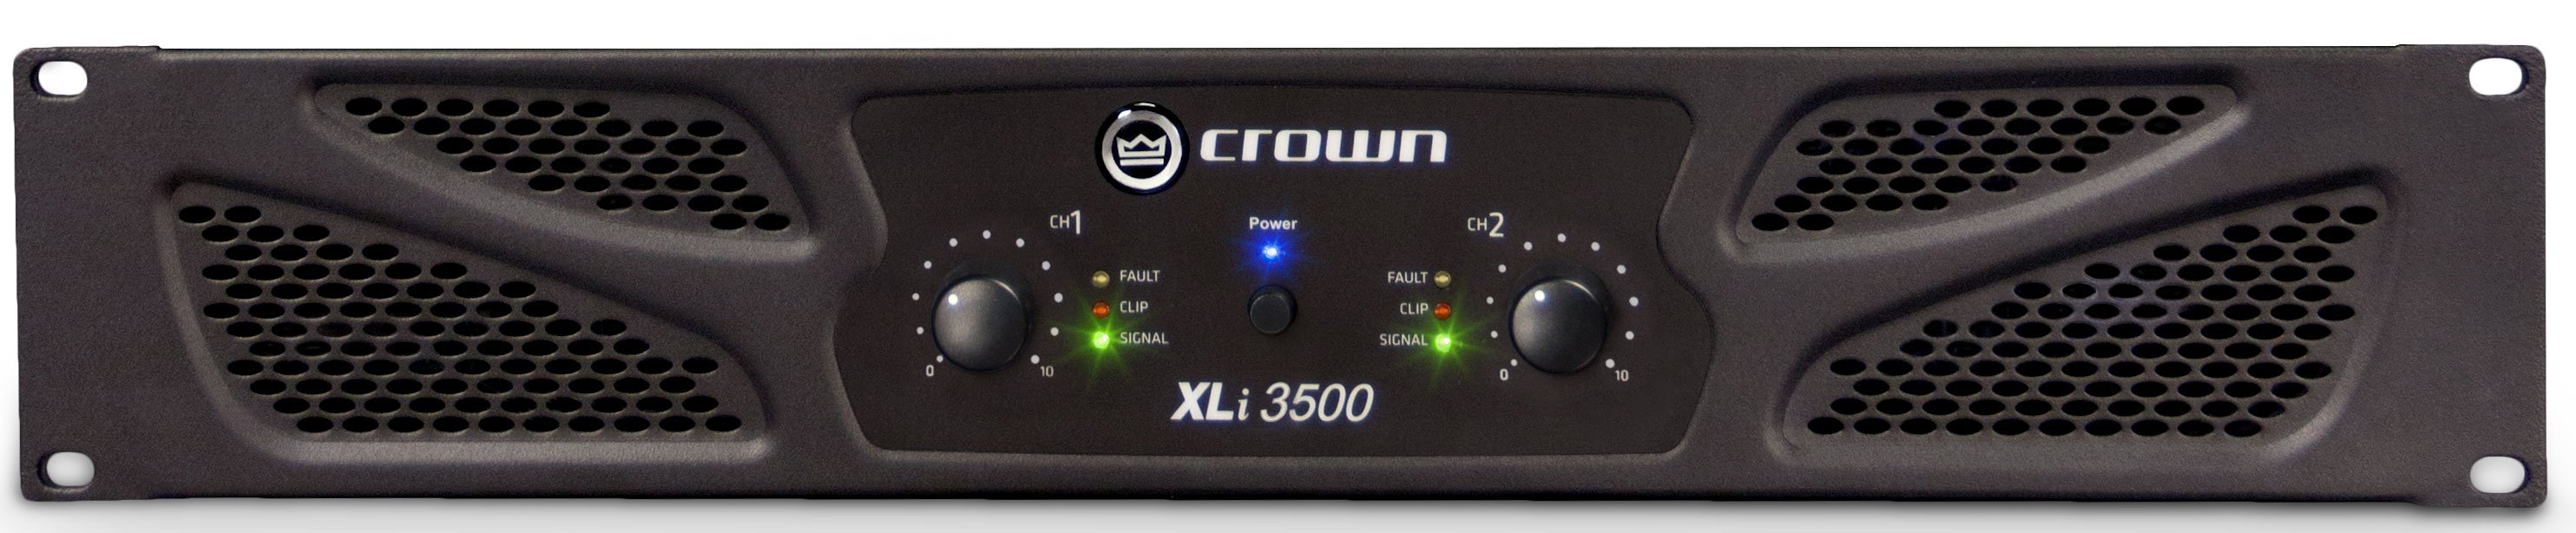   CROWN XLI 3500